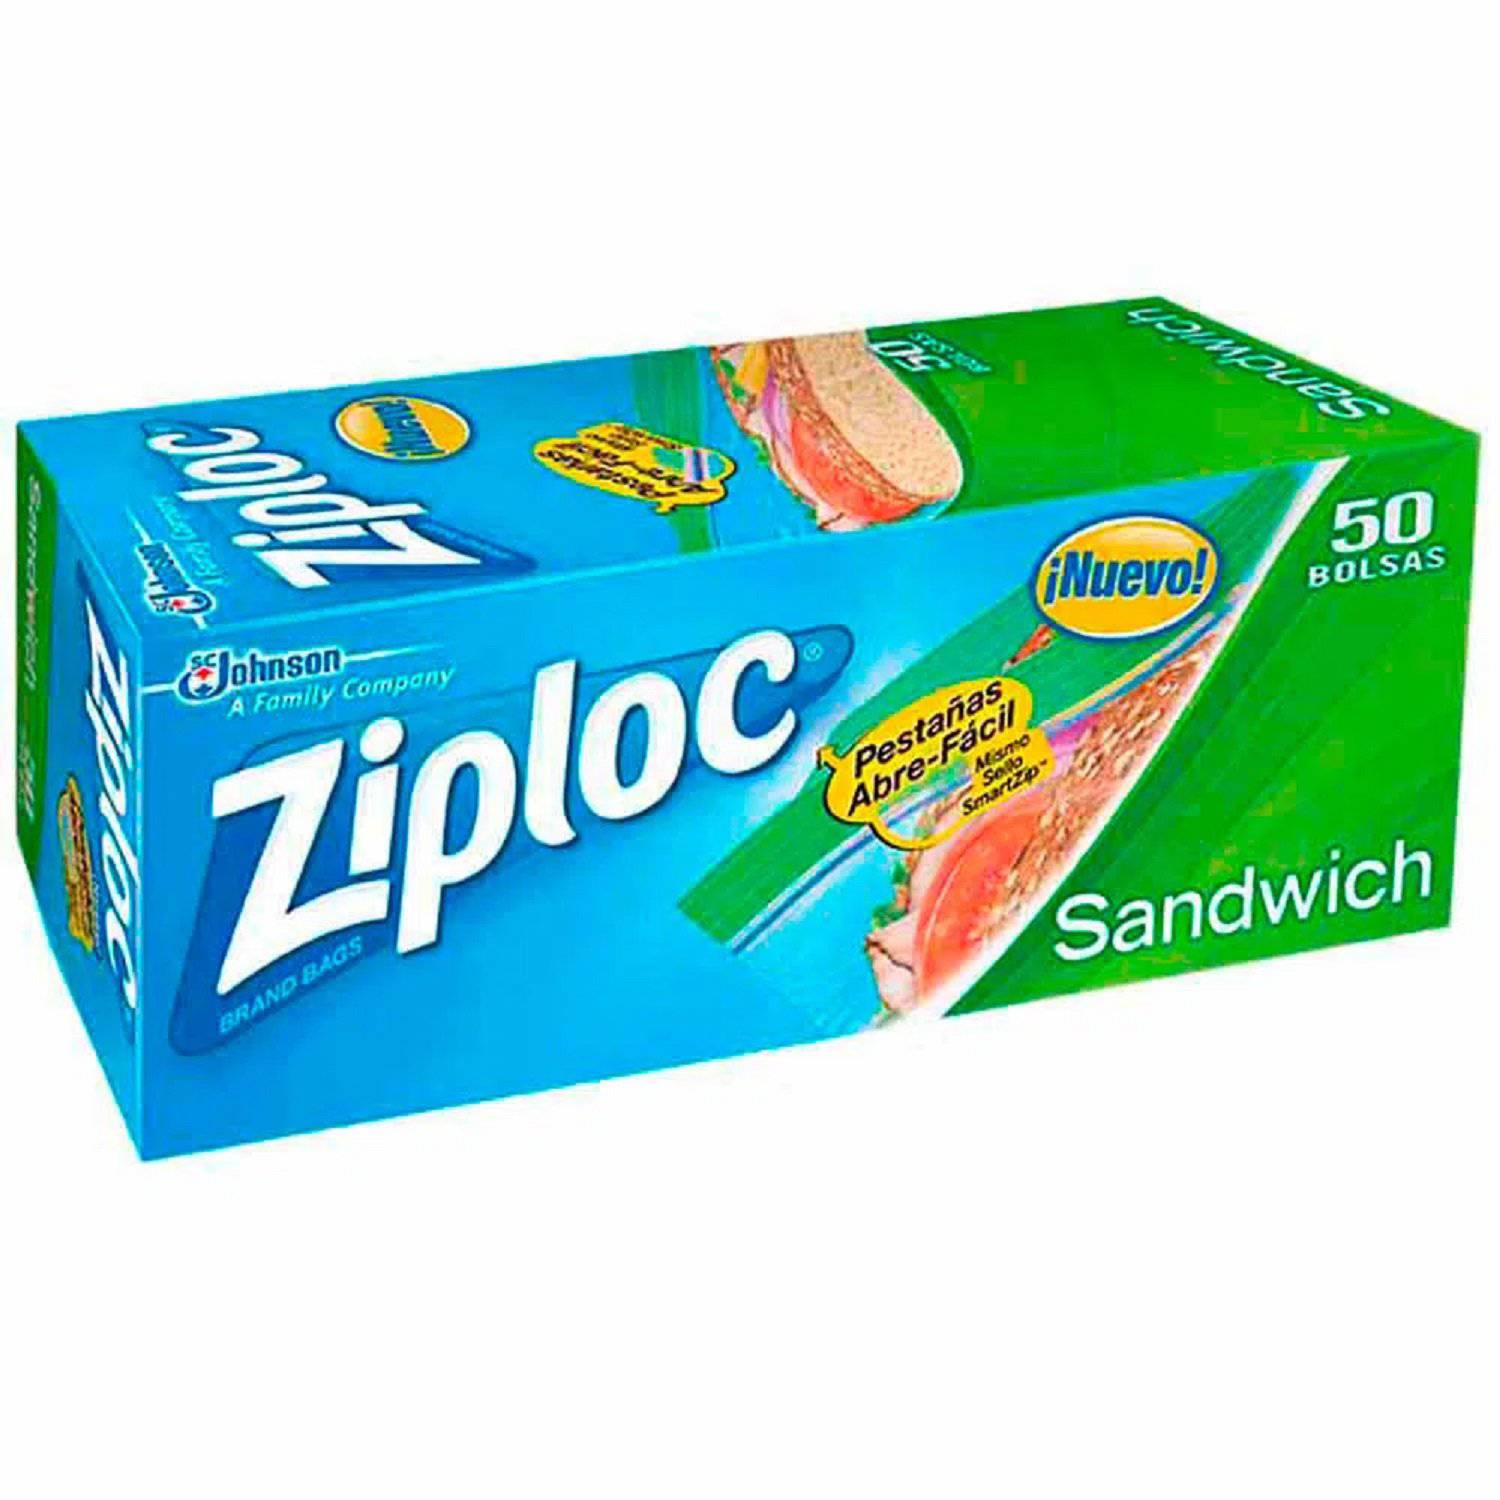 Bolsas Sandwich Ziploc 50 Unidades